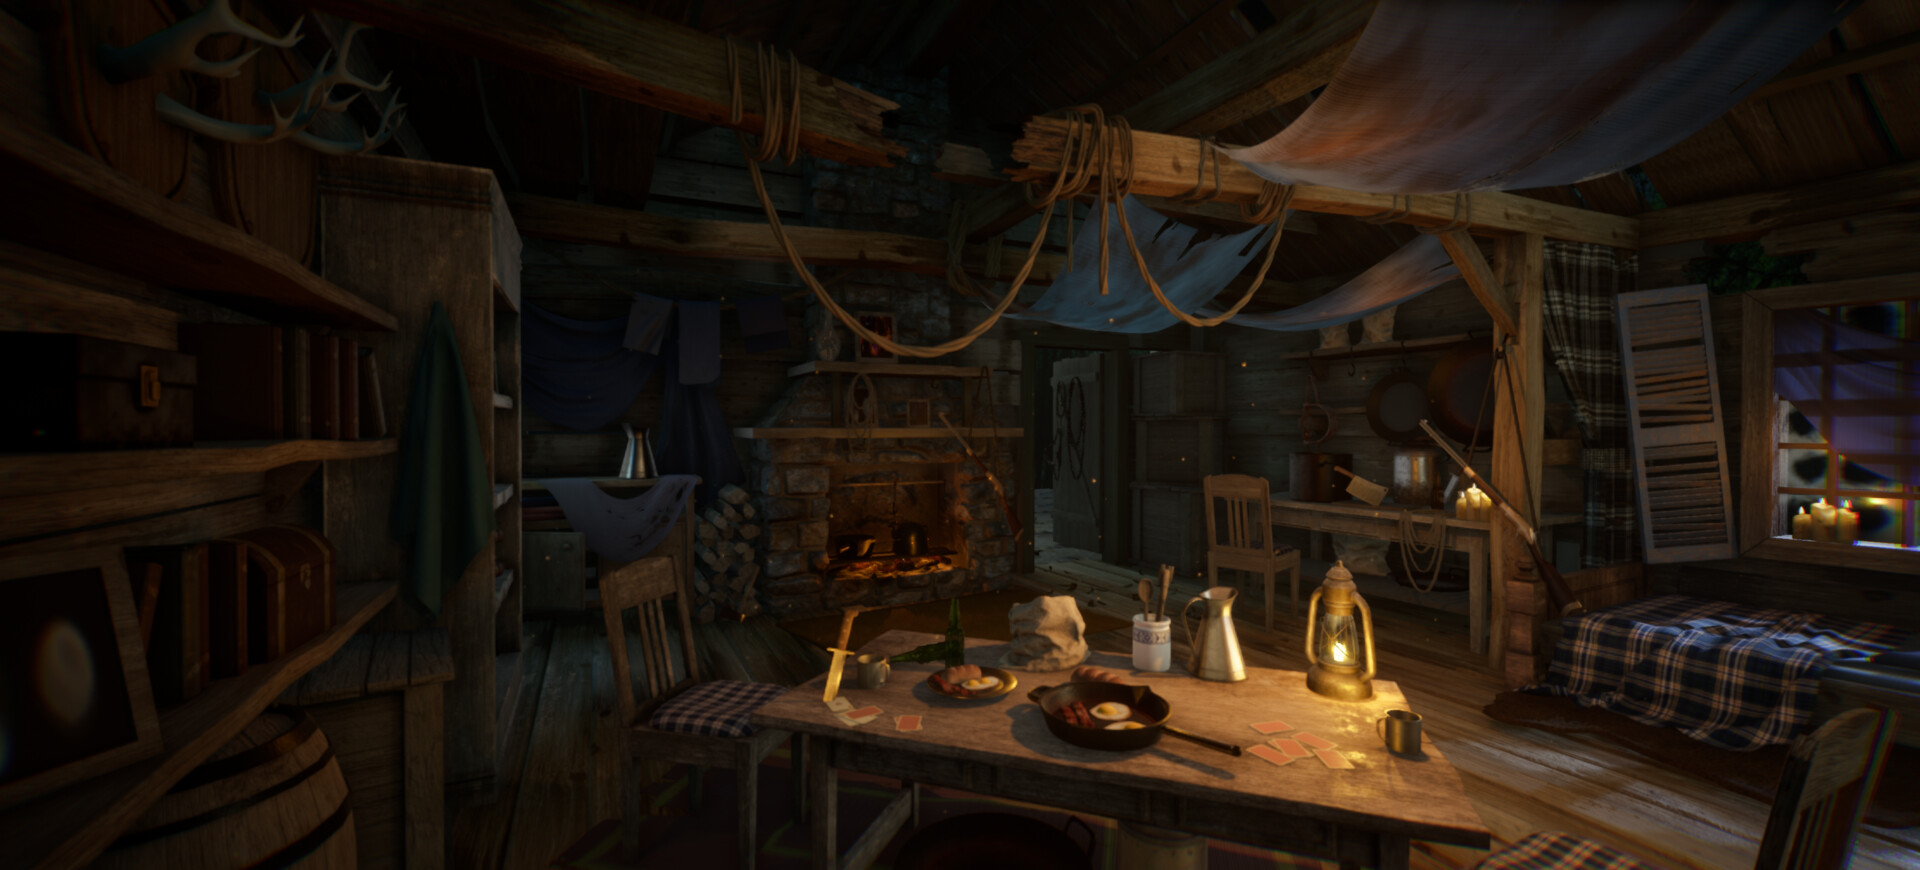 ArtStation - Camp Half-Blood Cabin Scene